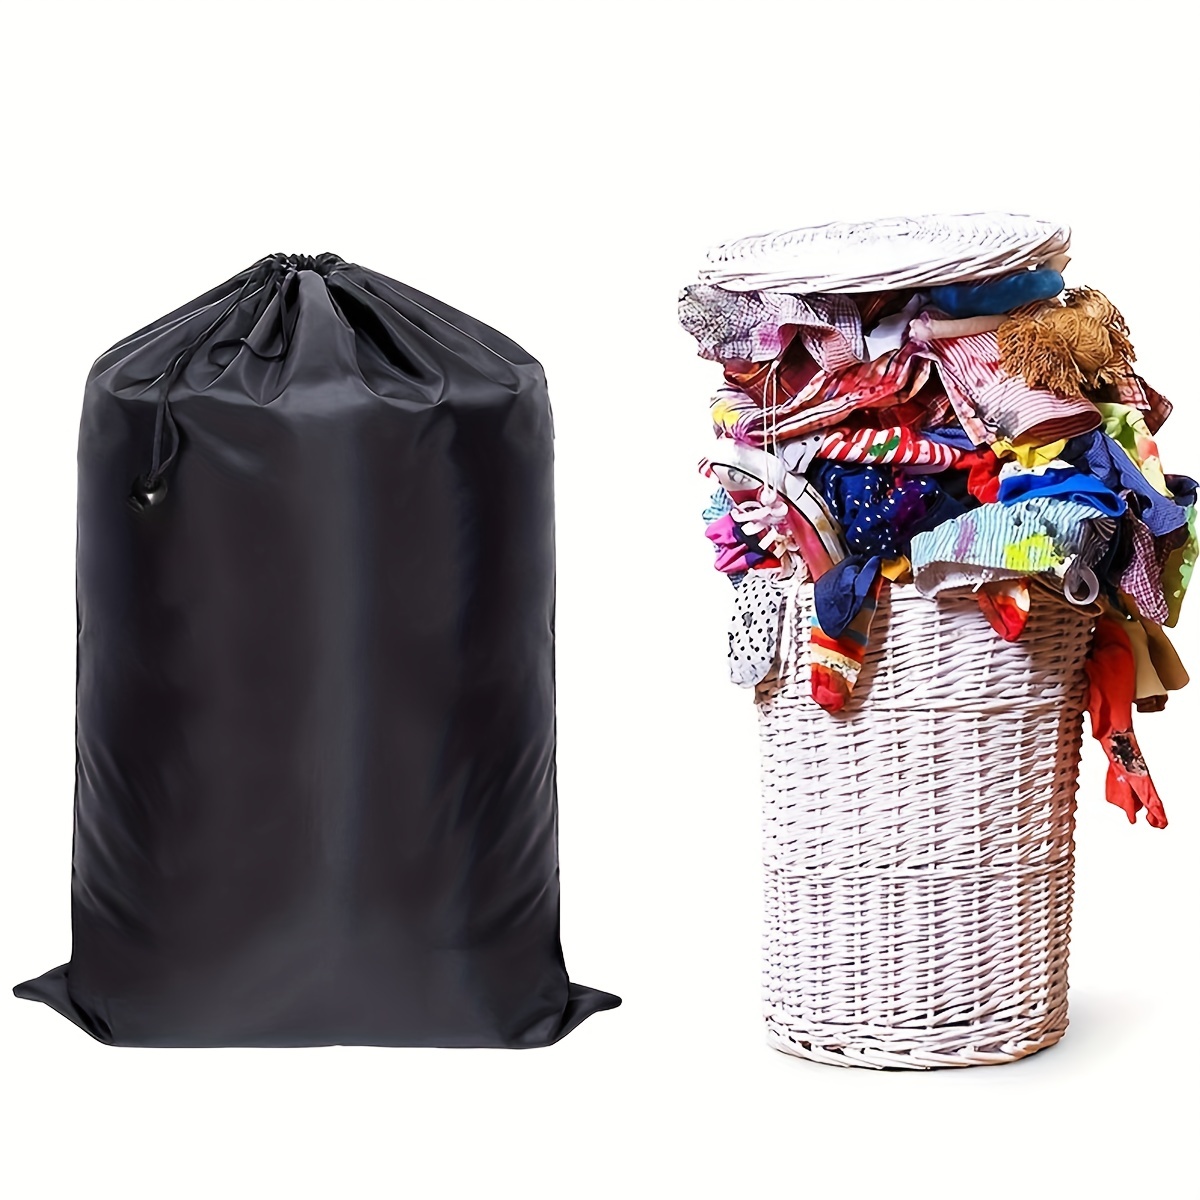 Ãzhido Backpack Laundry Bag, 115L Laundry Bag Heavy Duty Extra Large, Sturdy Laundry Backpack, Portable Laundry Bag with Straps, Durable Laundry Bag